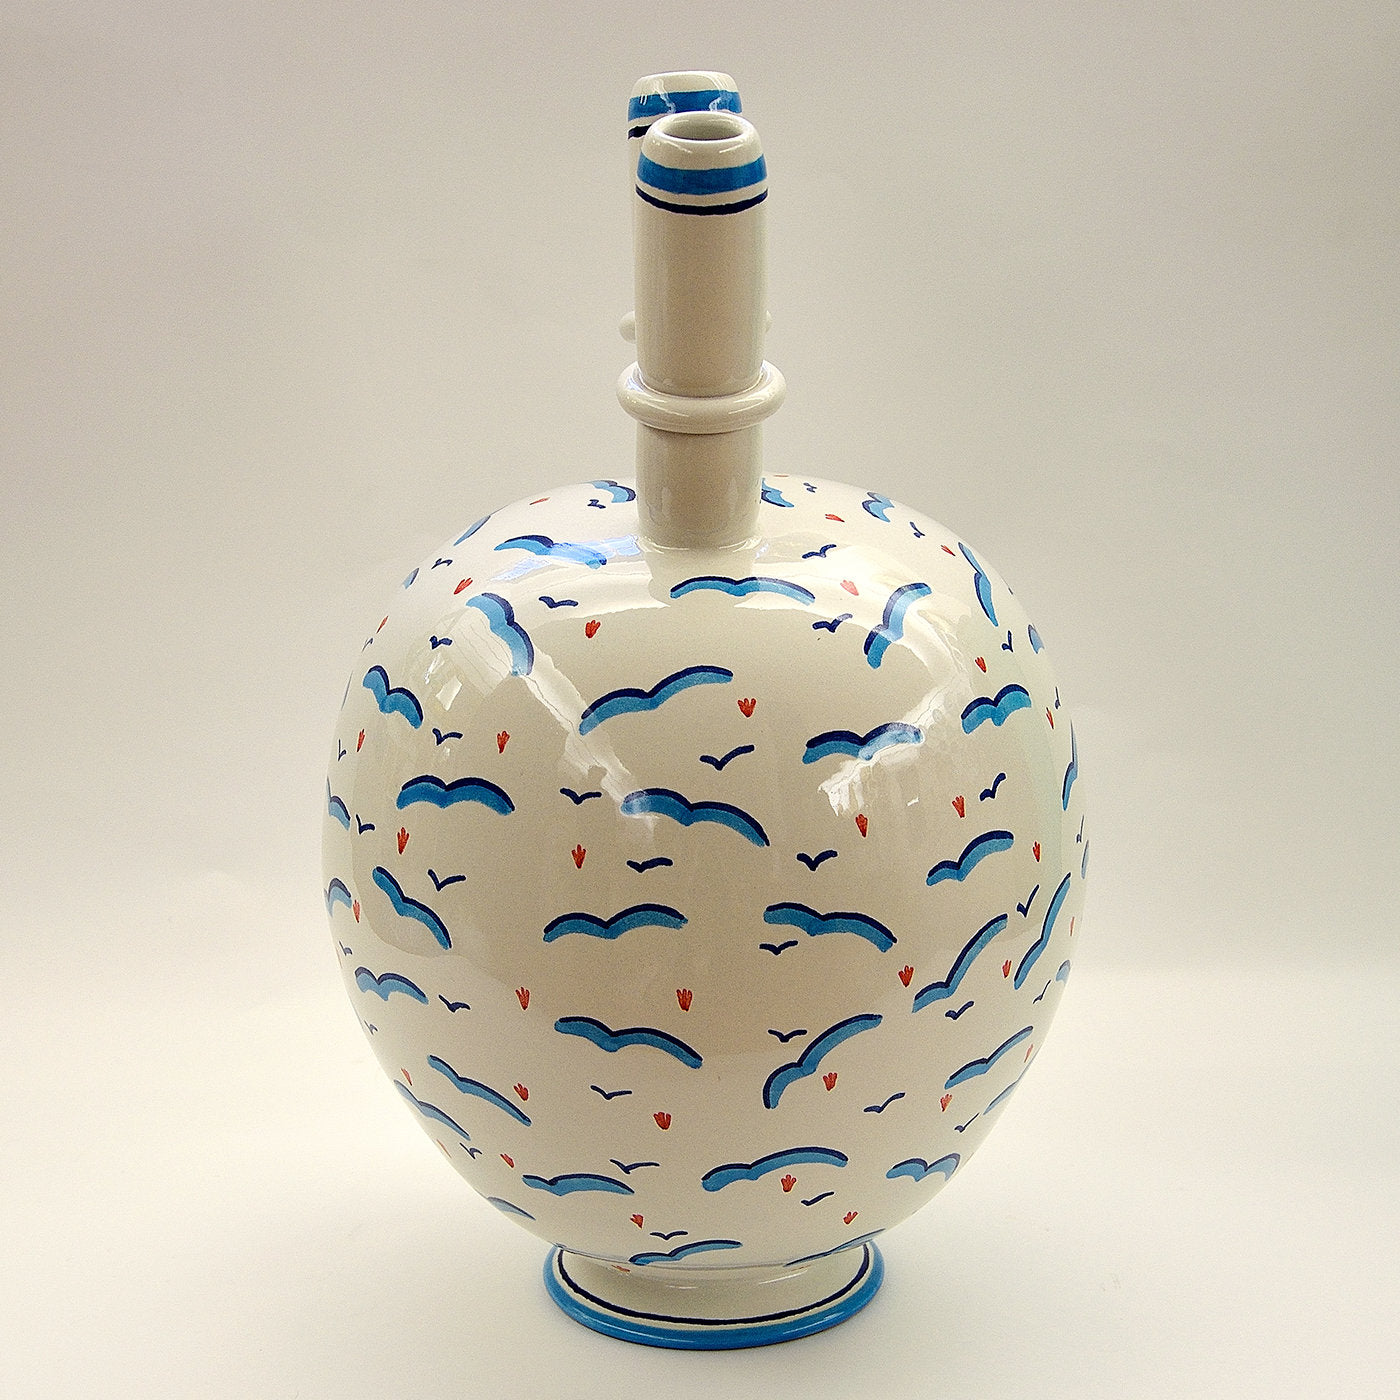 White Vase With Gulls by Ugo La Pietra - Alternative view 2